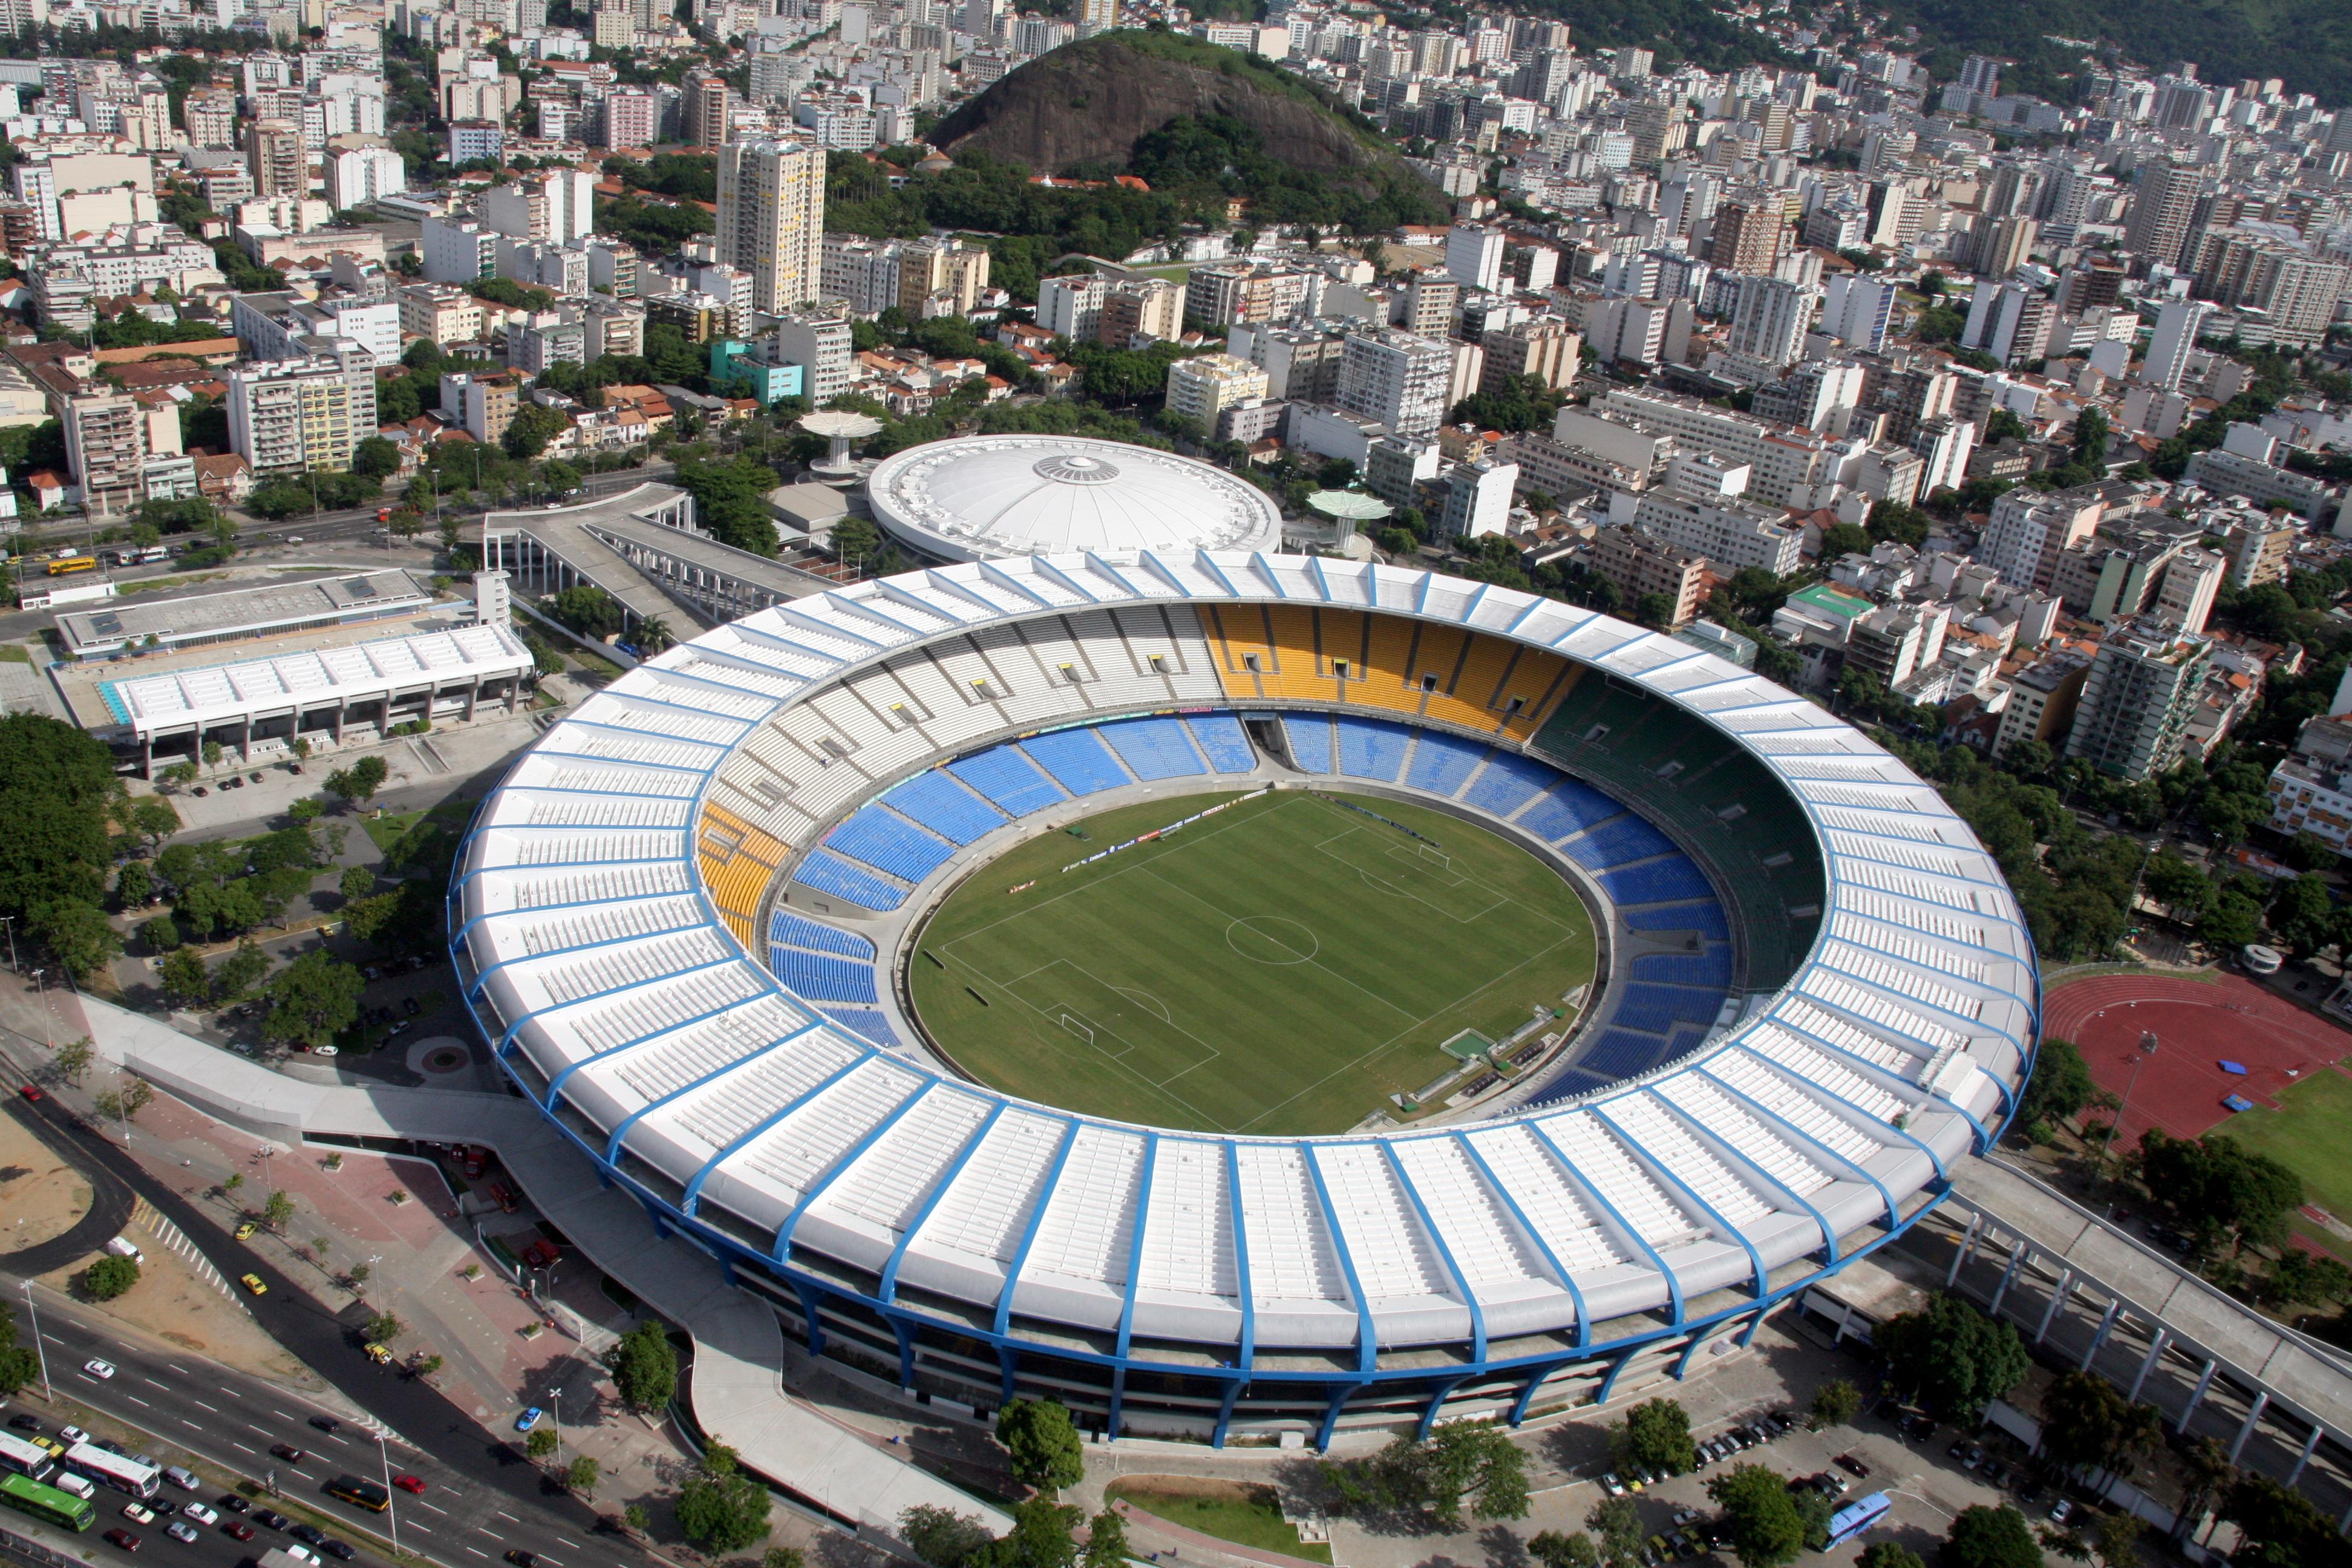 Aerial view of the Maracanã